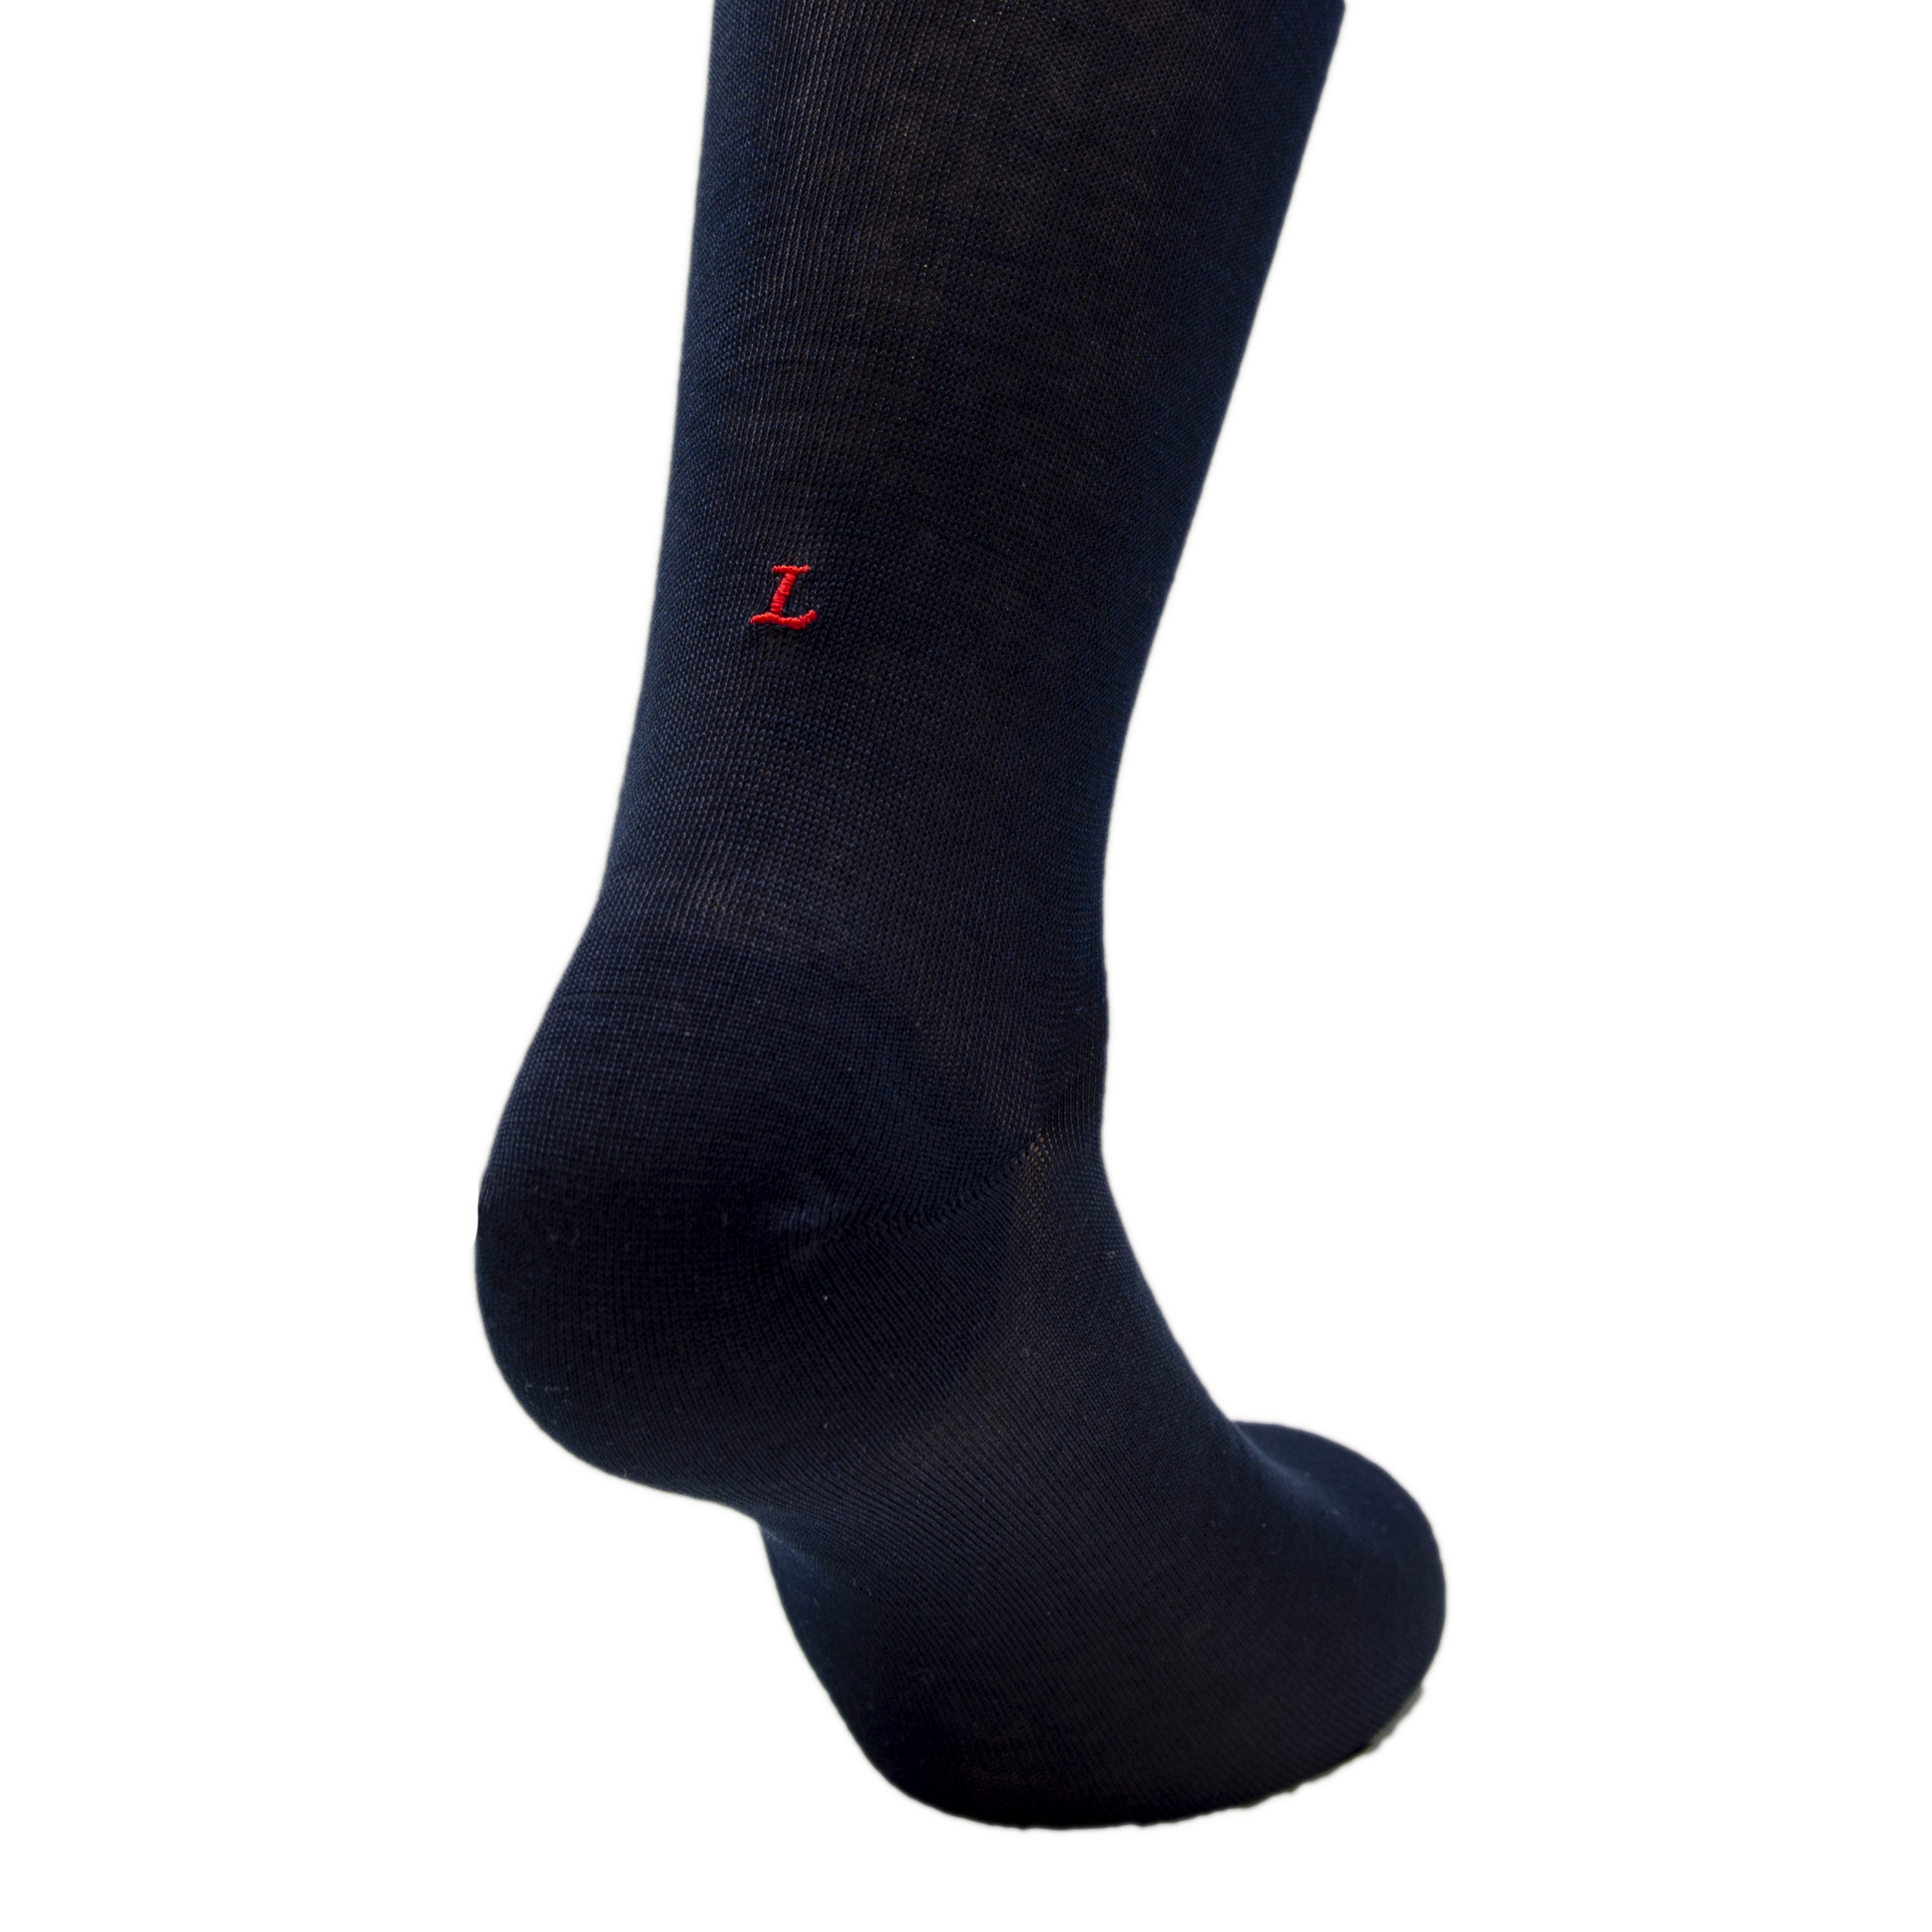 Blue Men's Socks with Red Initials - Filo di scozia Super light Stretch - Size 40/45 - 150